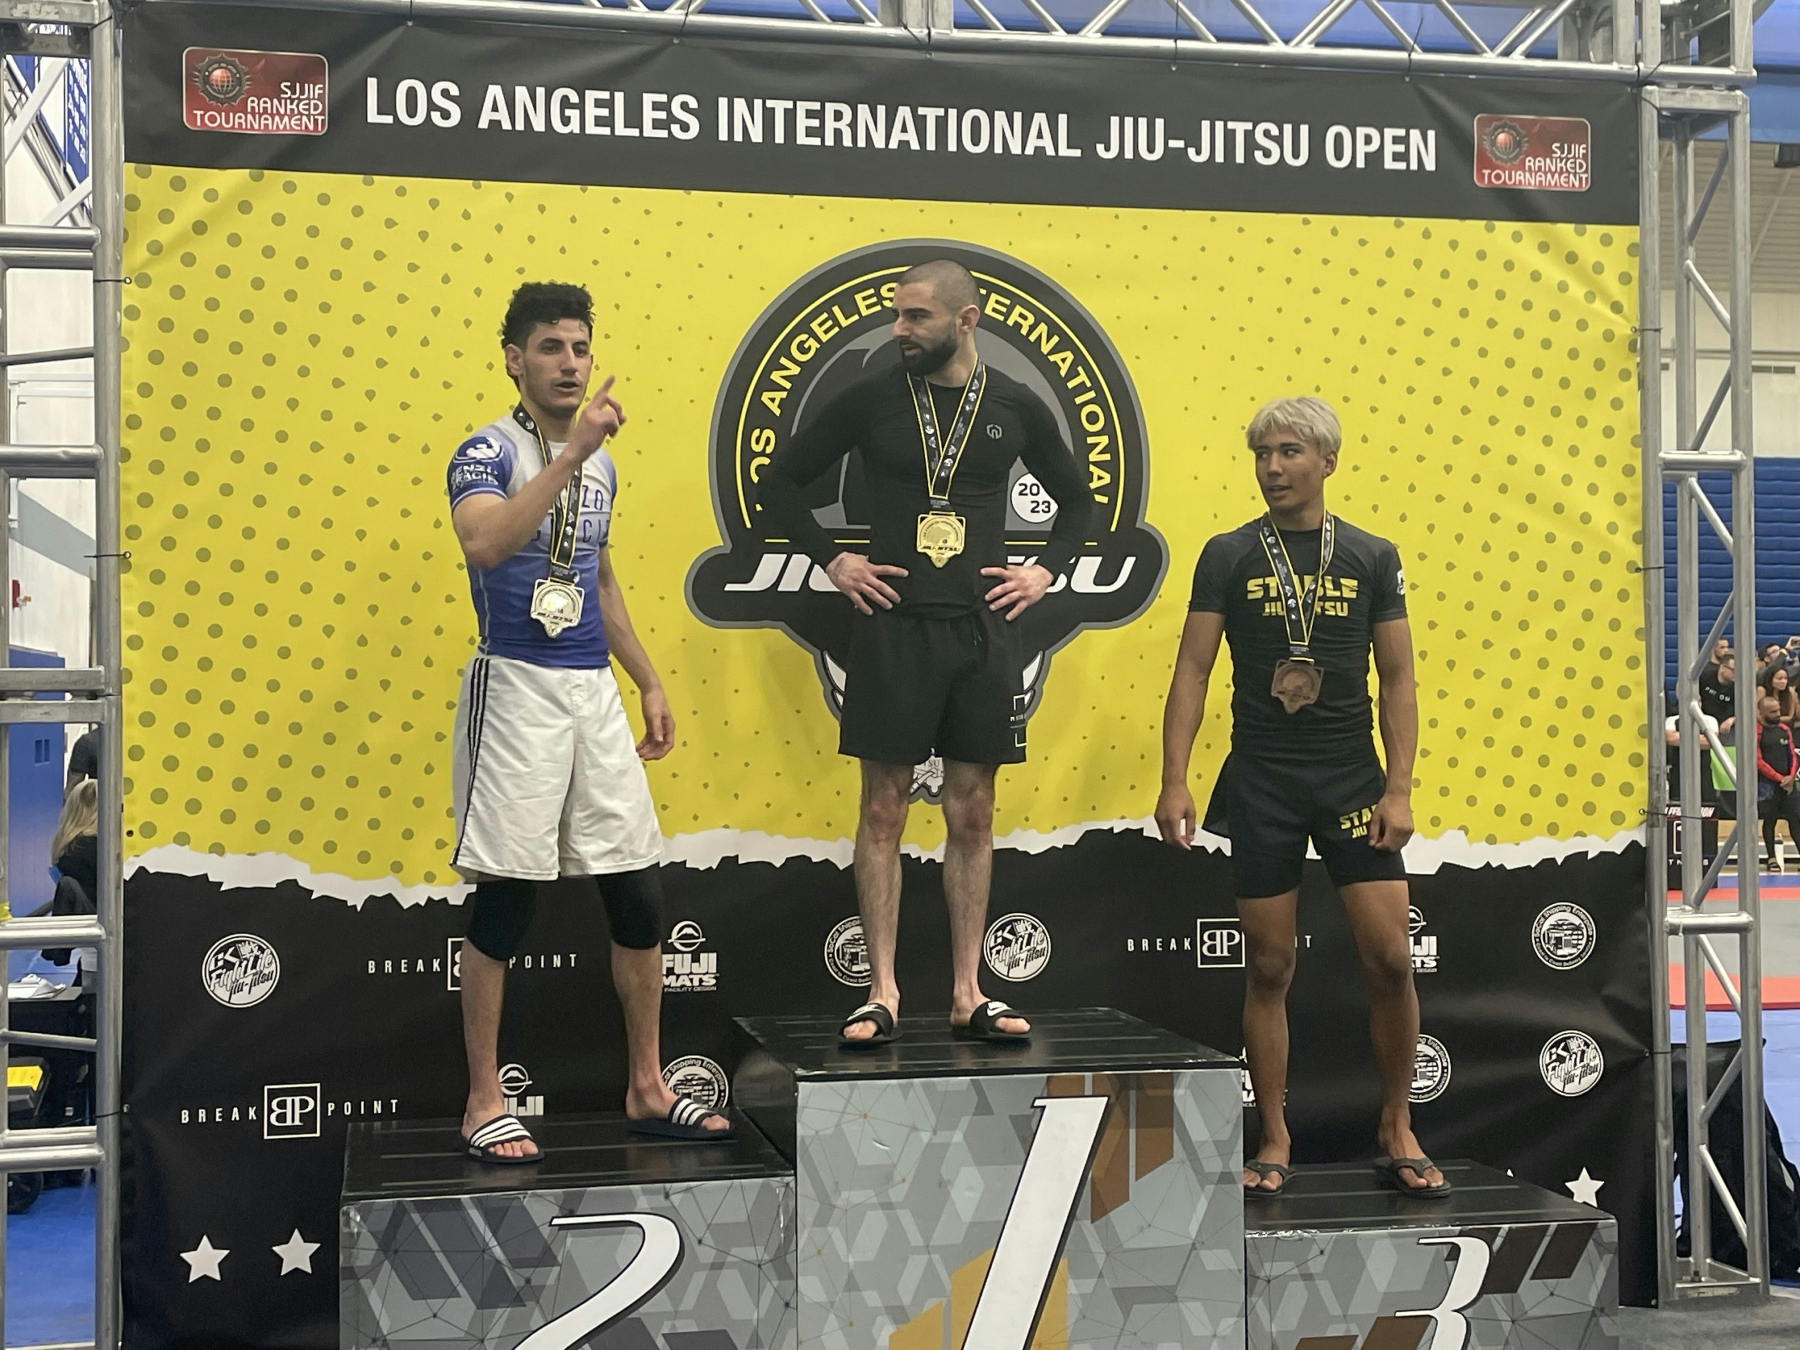 Pierre Tobgui Wins Gold at NABJJF Los Angeles International Jiu-Jitsu Open!